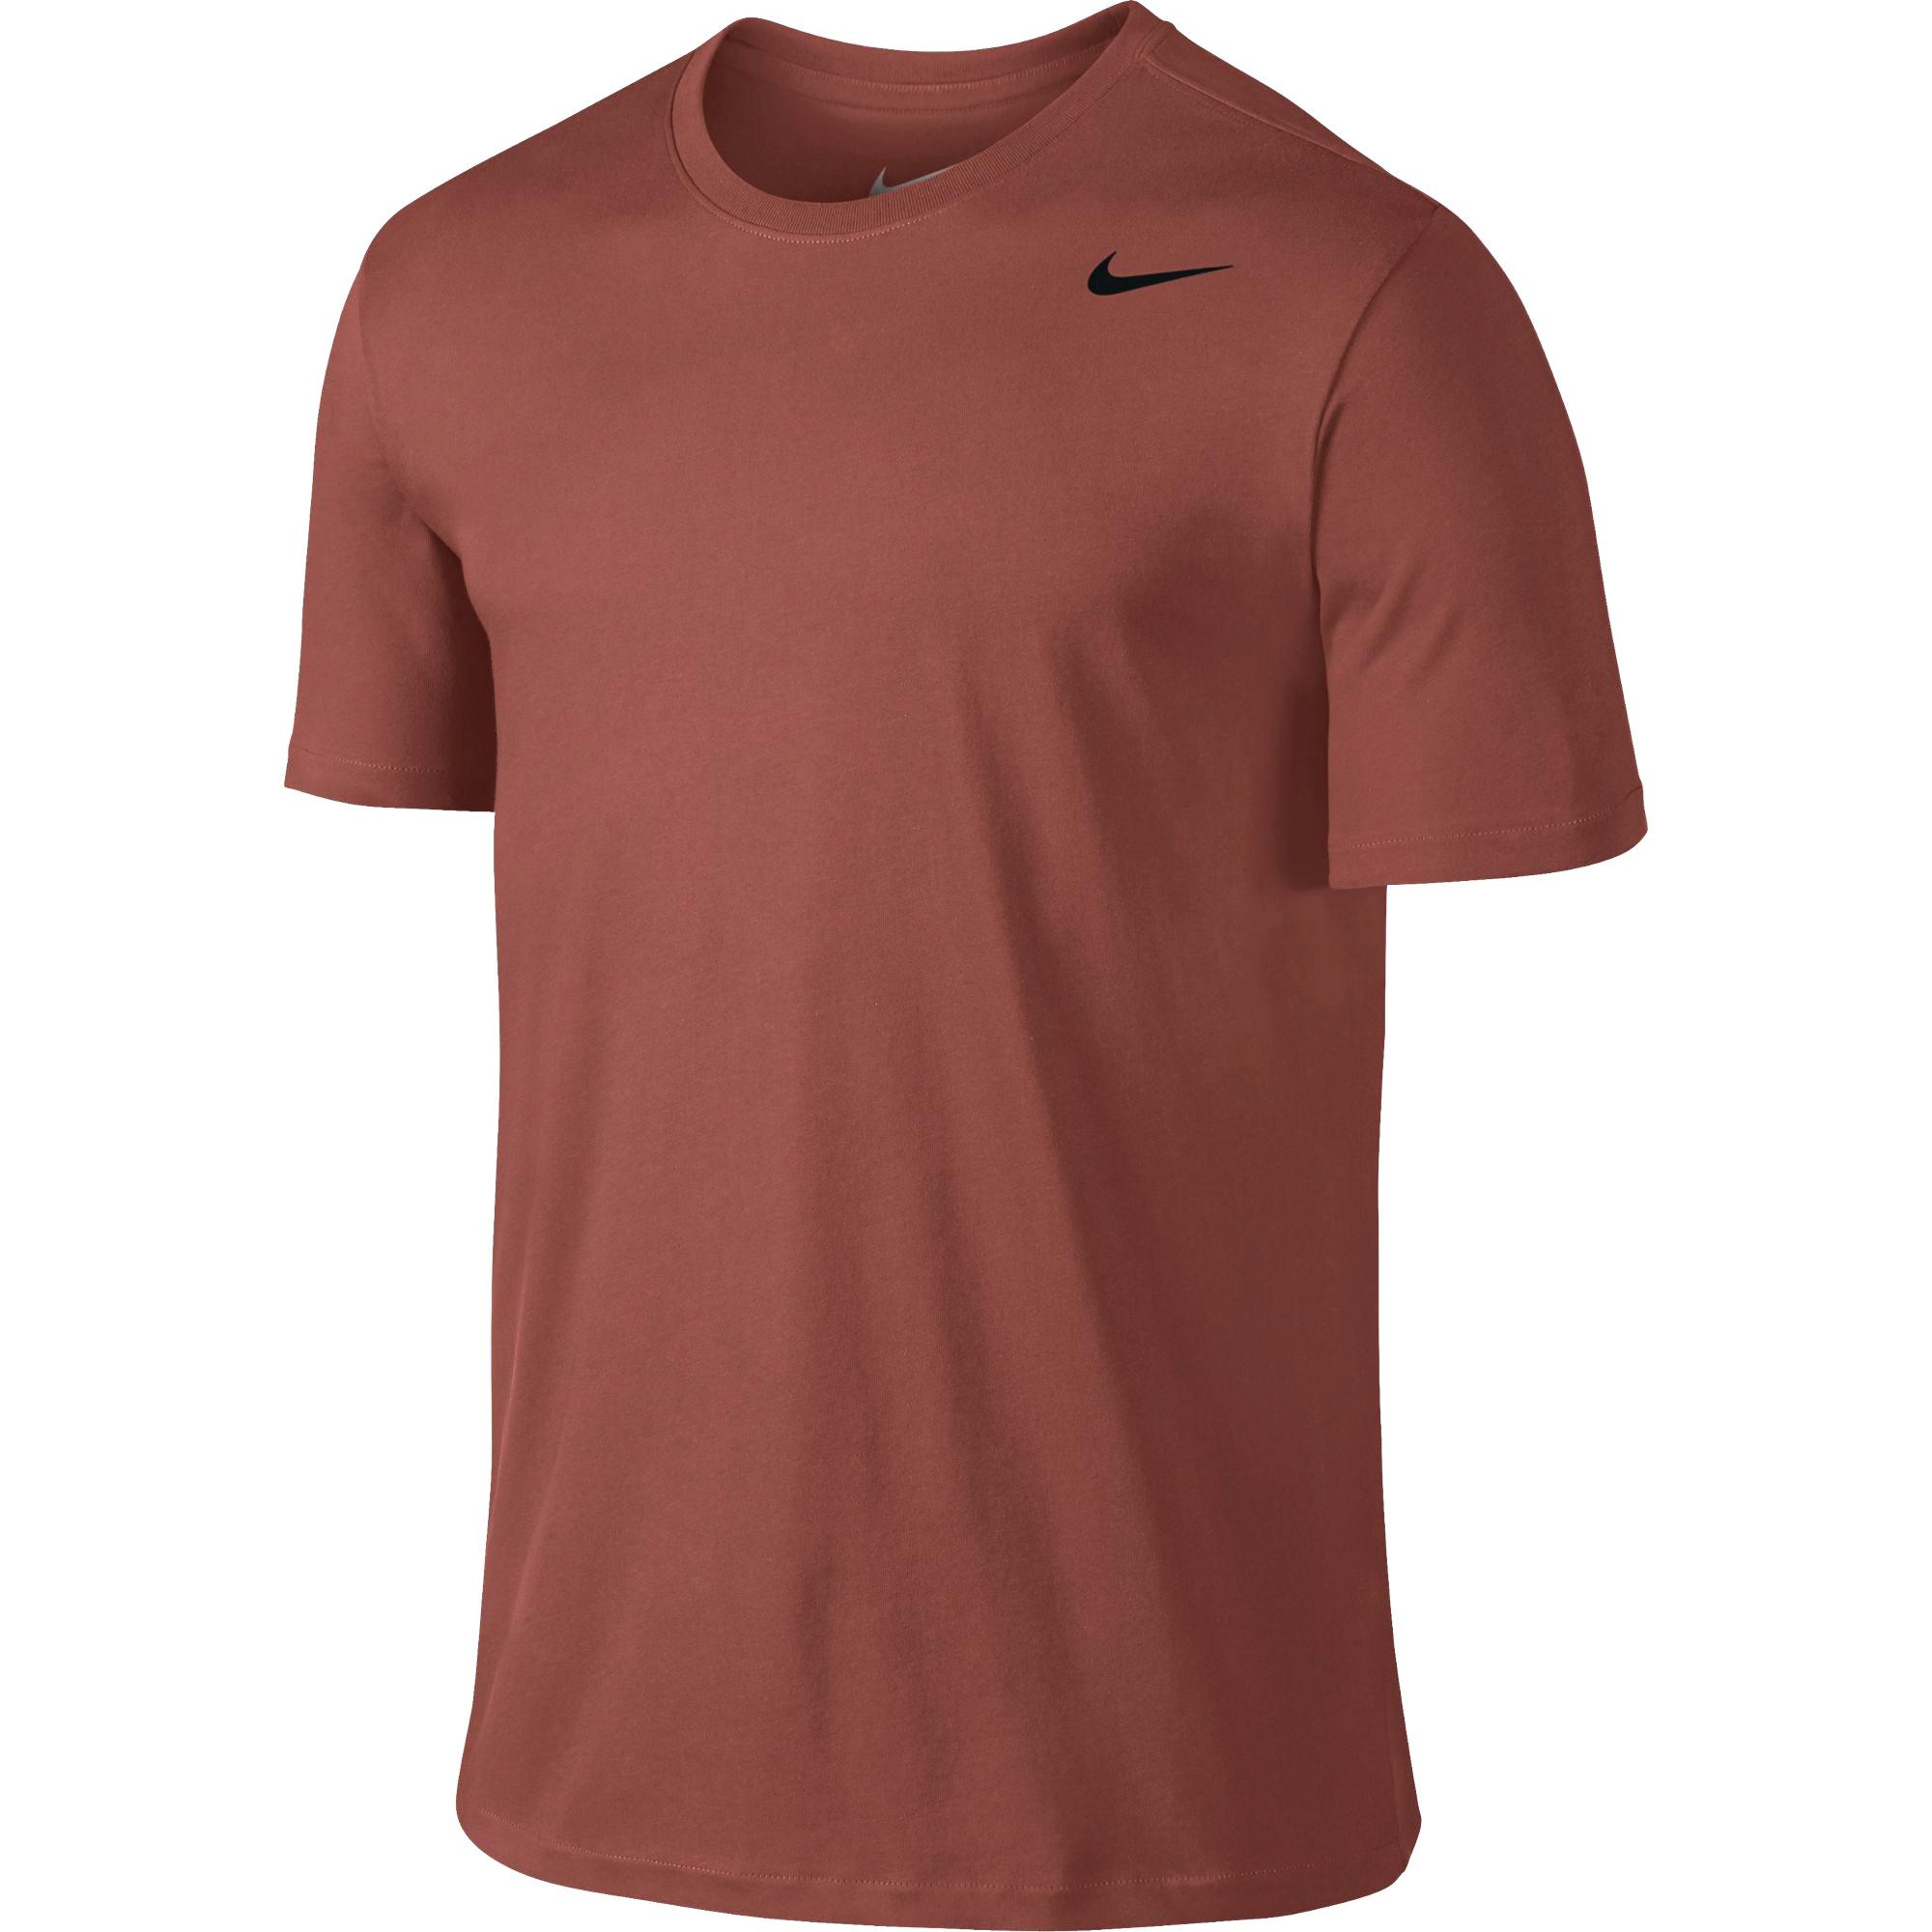 Nike Mens Dry Training T-Shirt - Burnt Orange - Tennisnuts.com